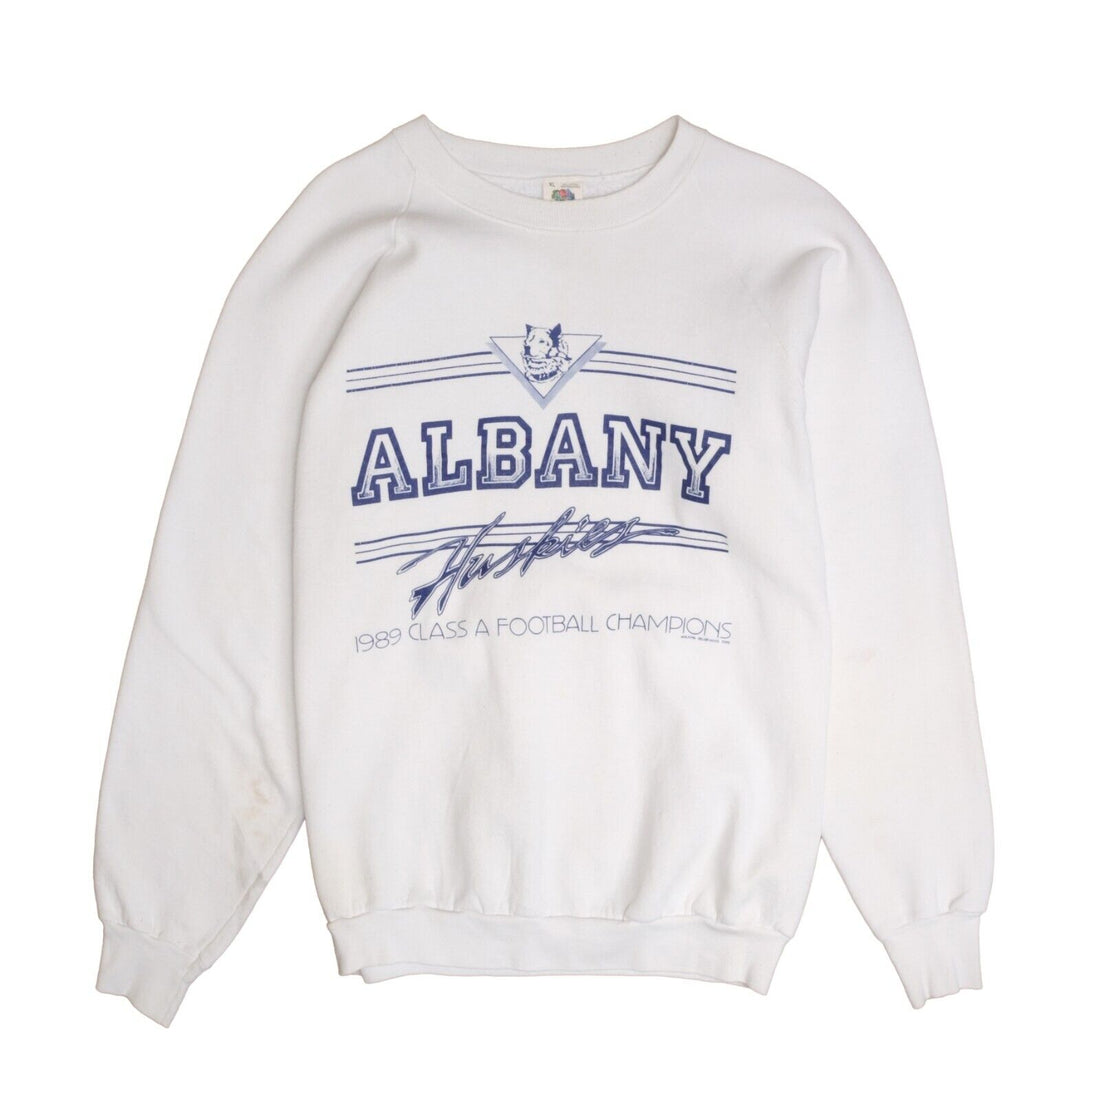 Vintage Albany Huskies Football Champions Sweatshirt Crewneck Size XL 1989 80s